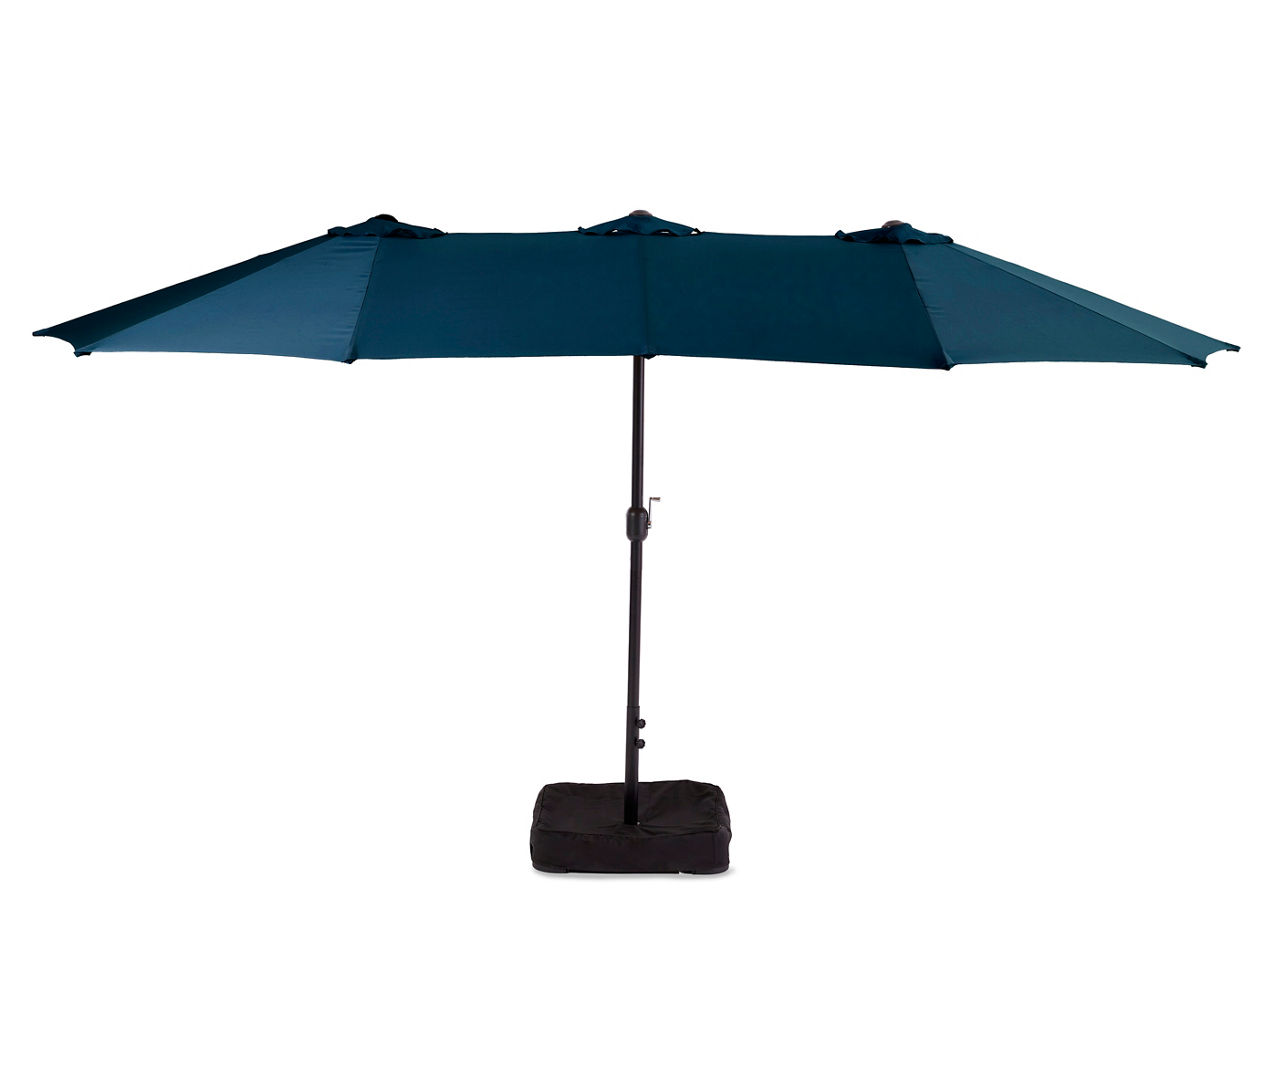 15' Legion Blue Triple Vent Patio Umbrella with Base